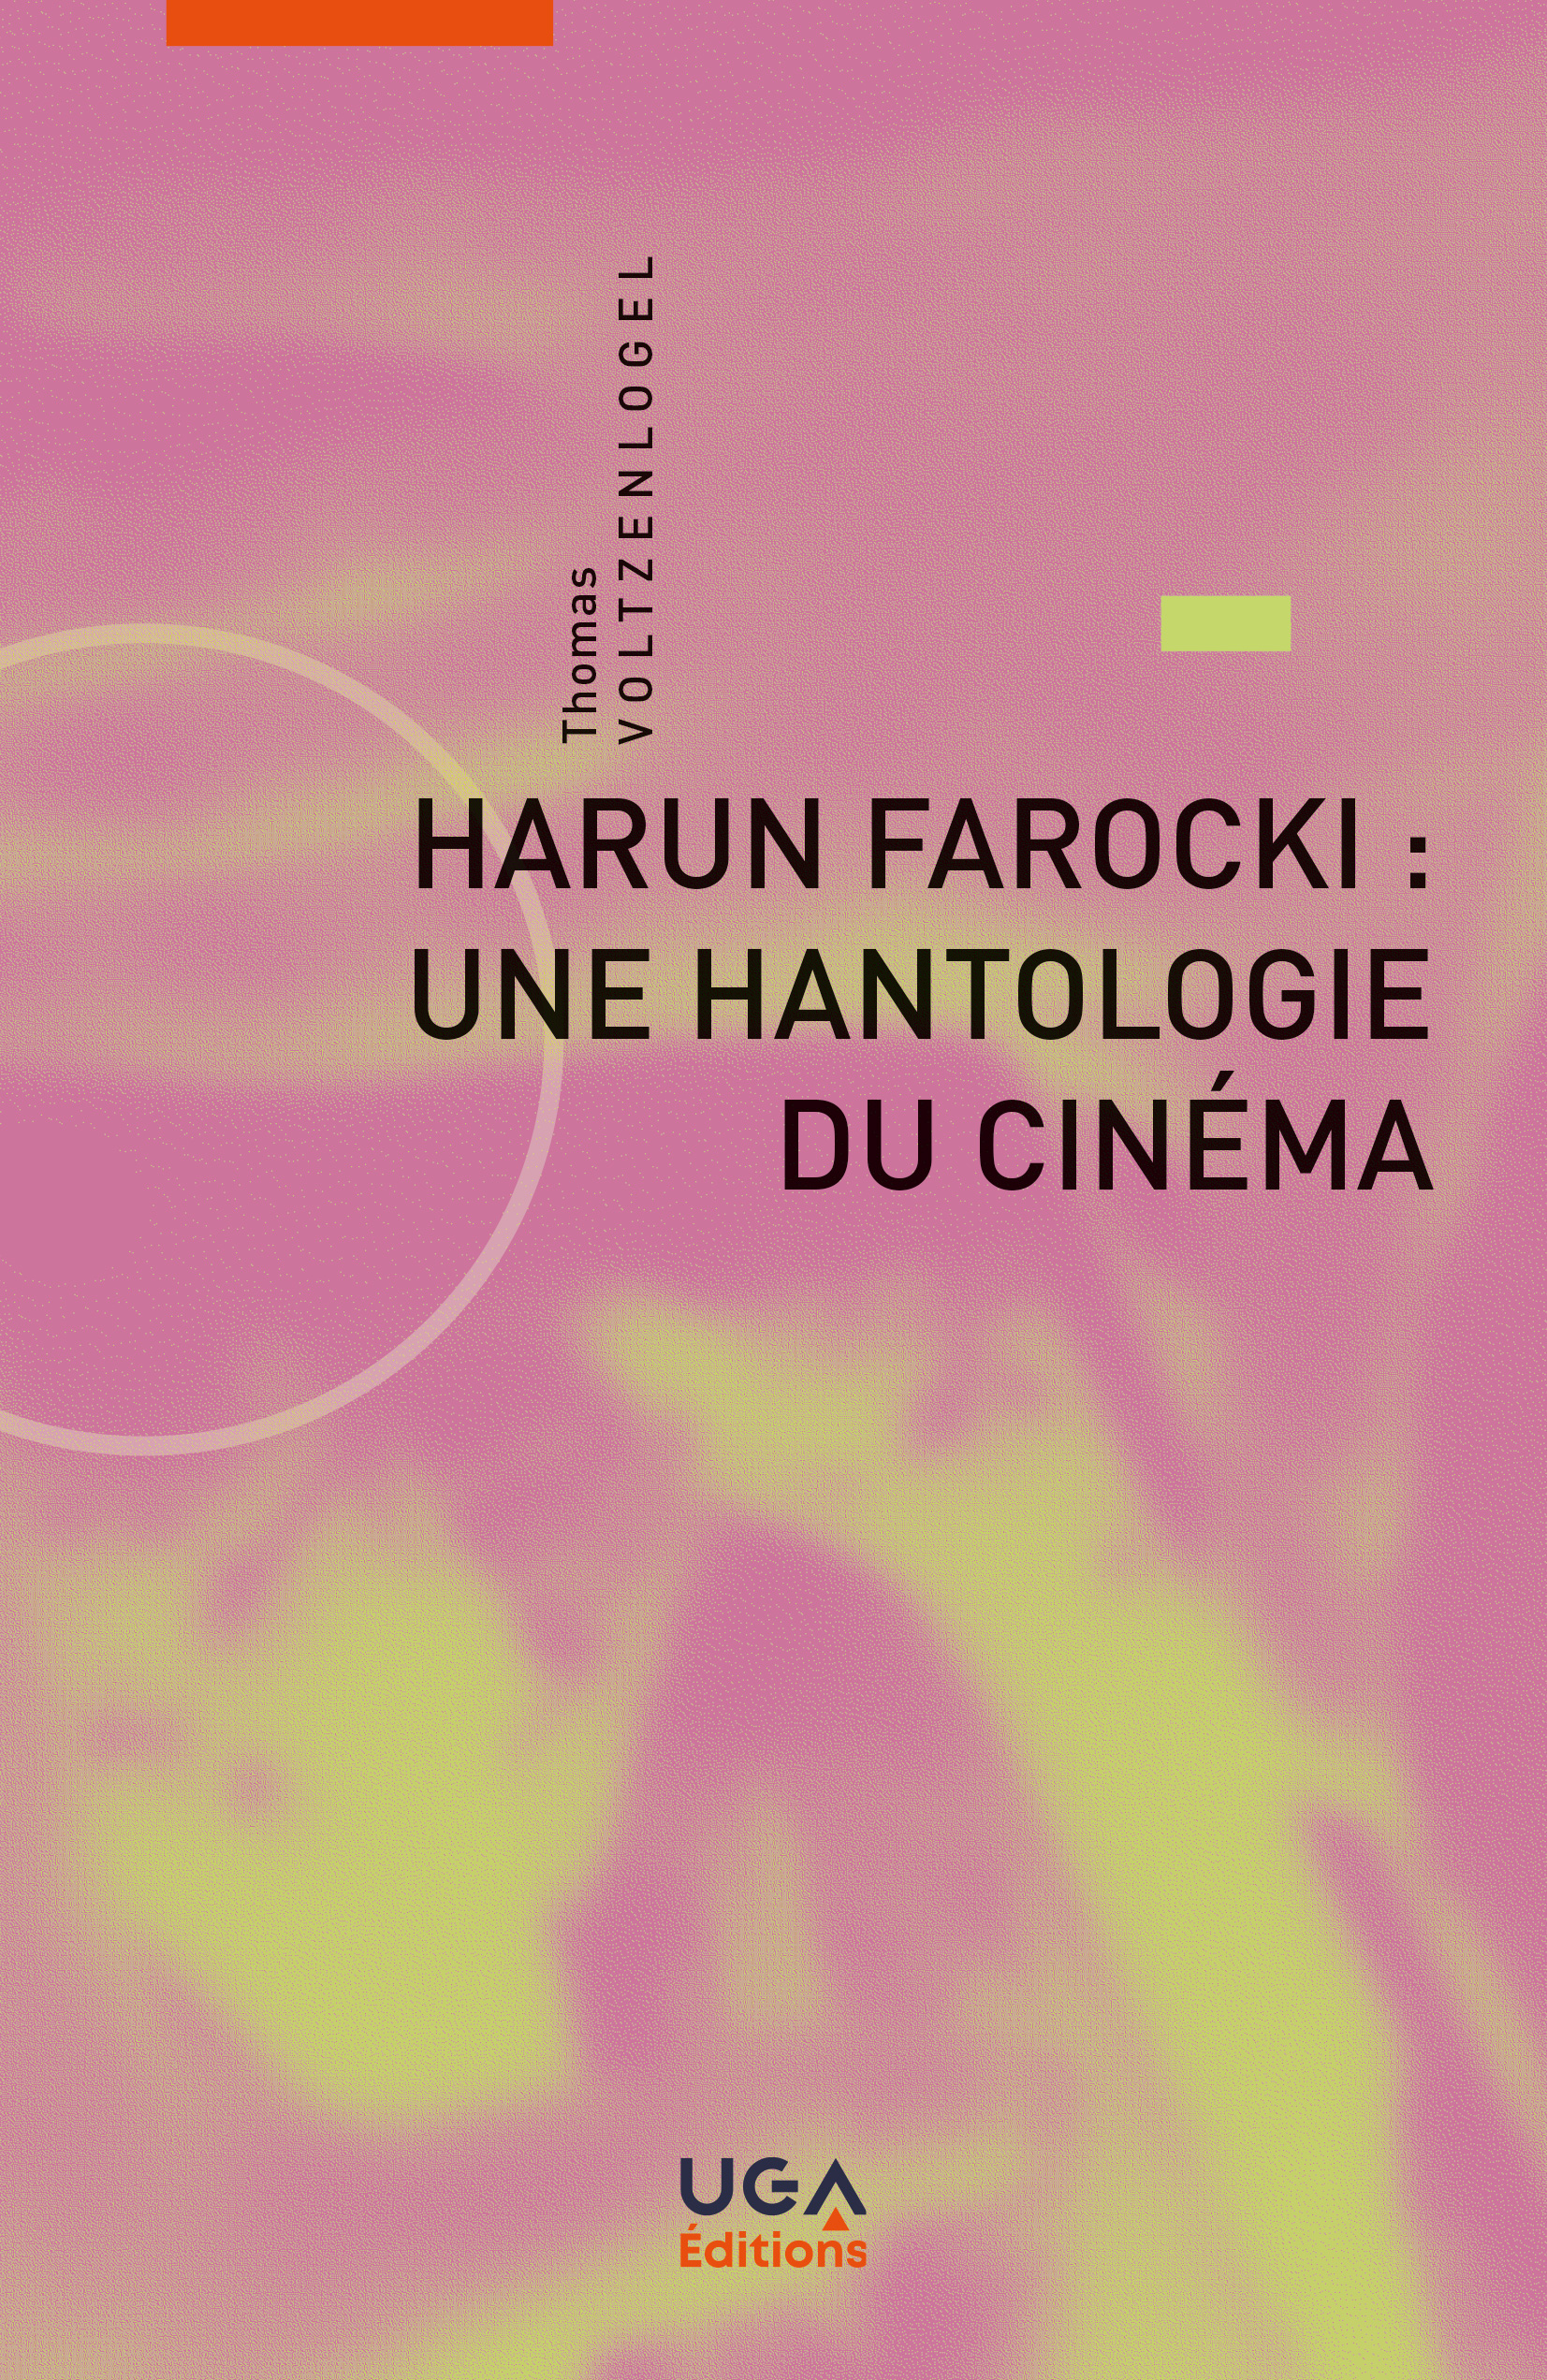 T. Voltzenlogel, Harun Farocki: Une hantologie du cinéma